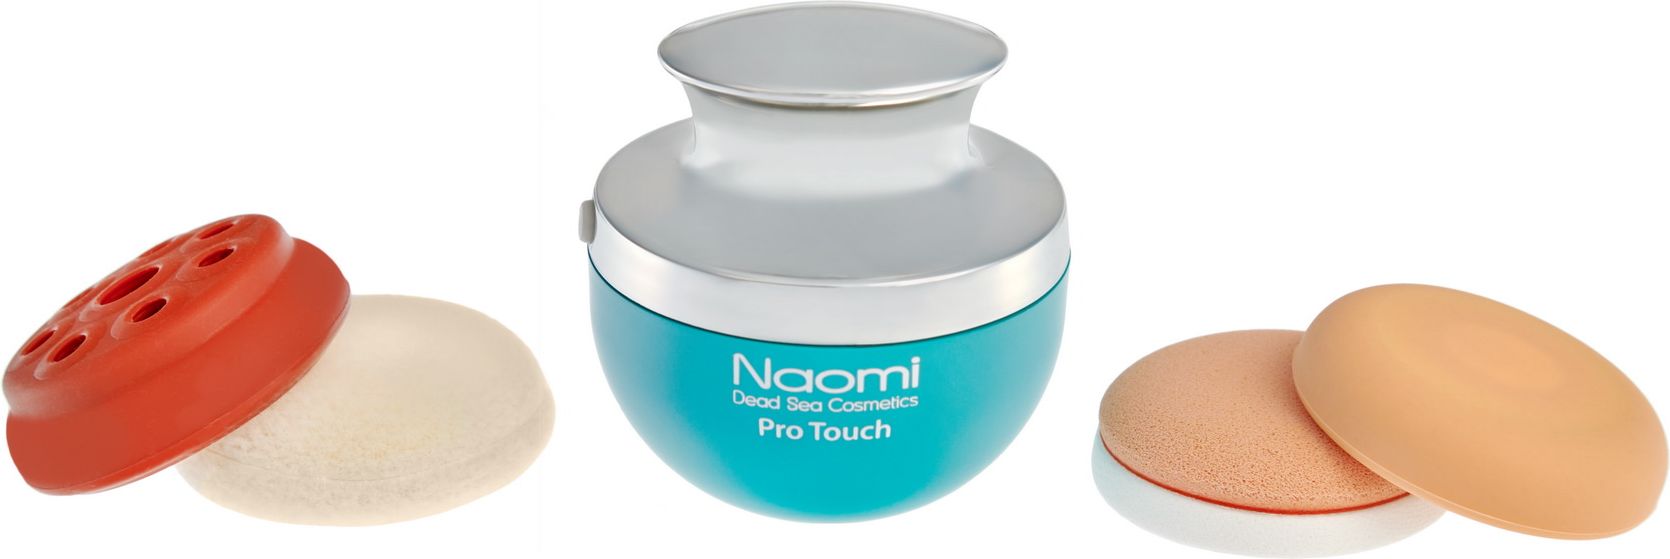 Прибор для ухода за кожей лица «PRO TOUCH» NAOMI